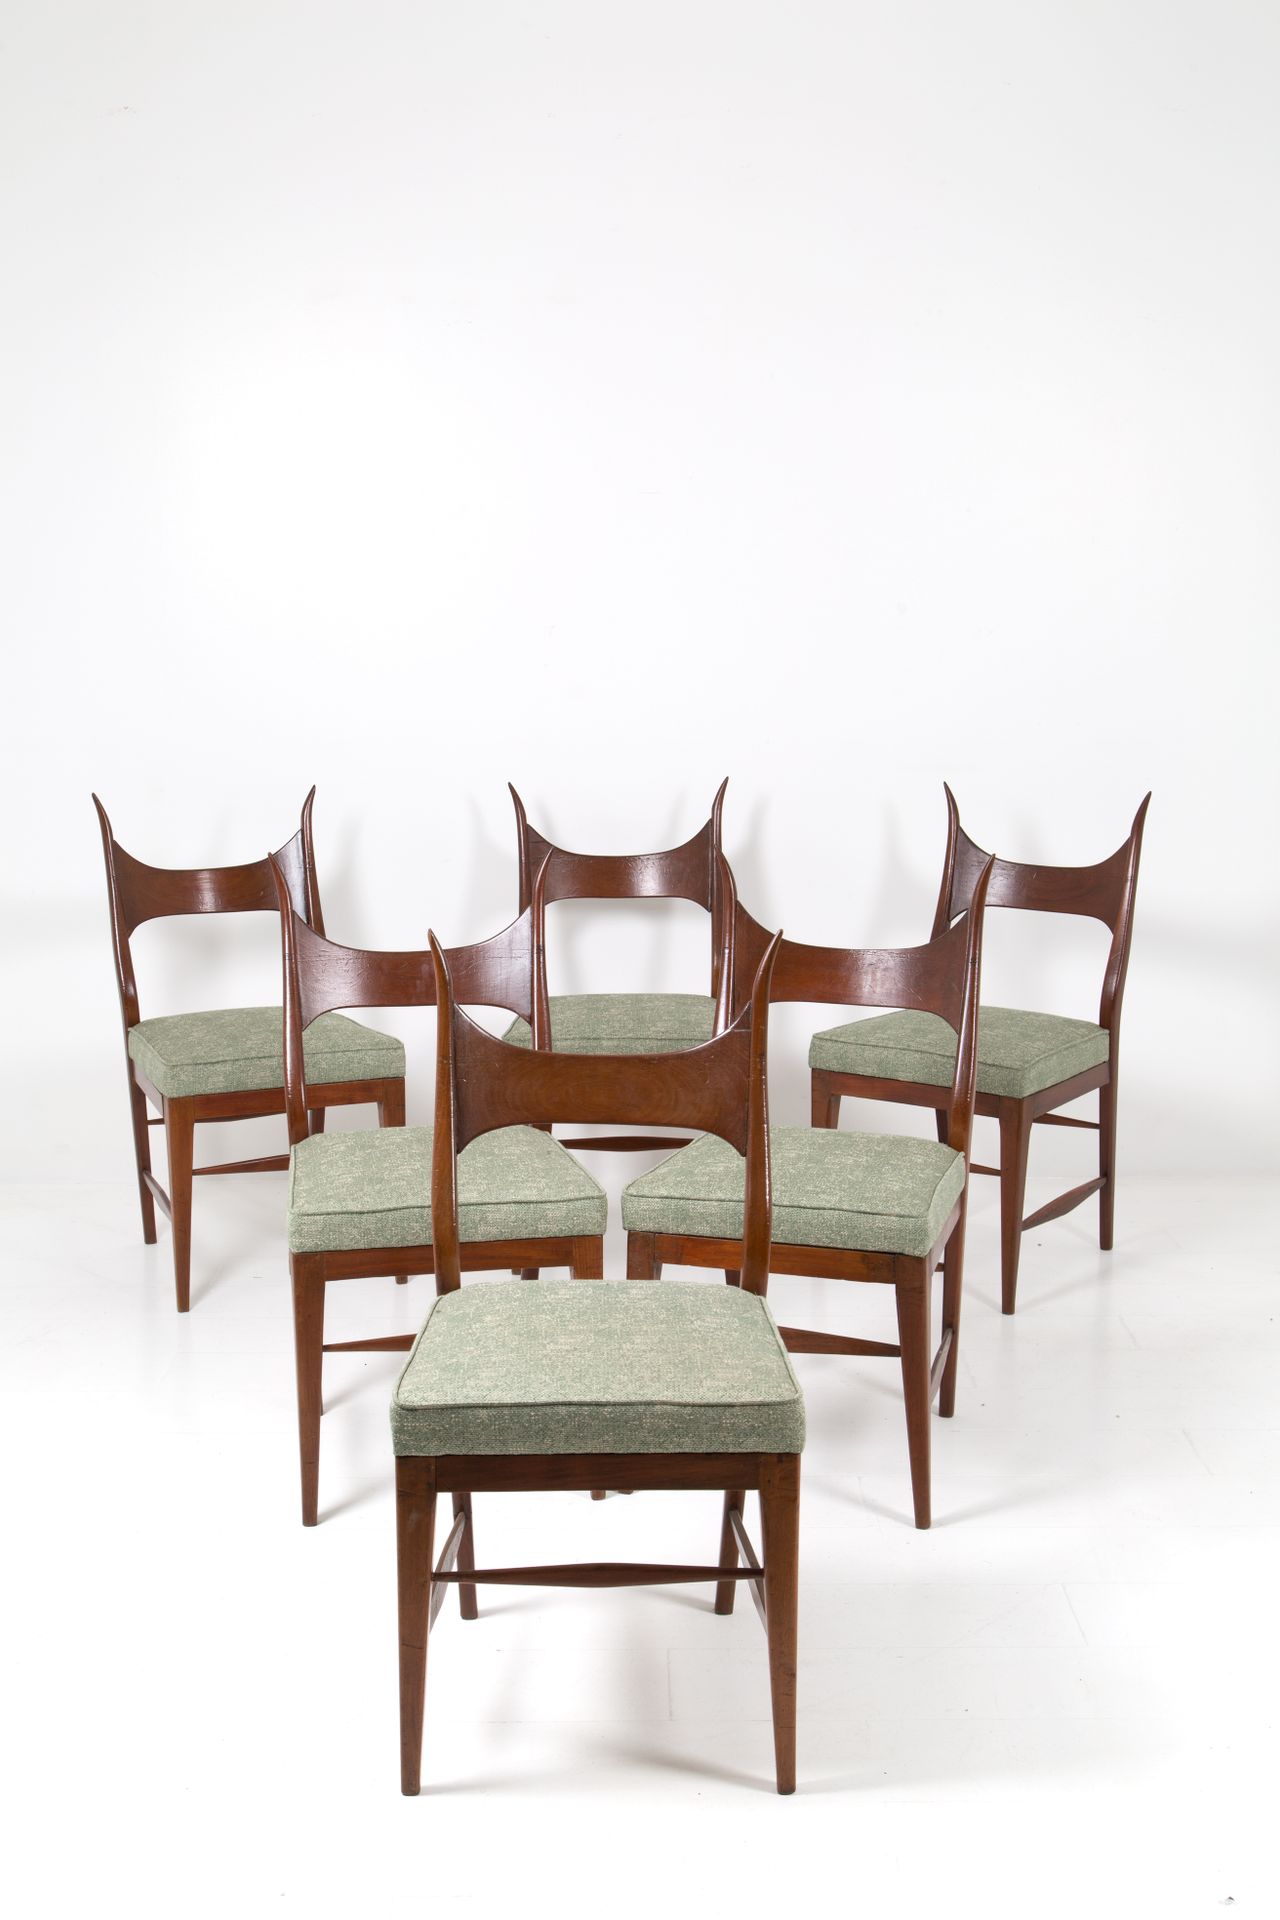 EDWARD WORMLEY. Six wooden chairs. 1950s EDWARD WORMLEY (Oswego, 1907 - Illinois&hellip;